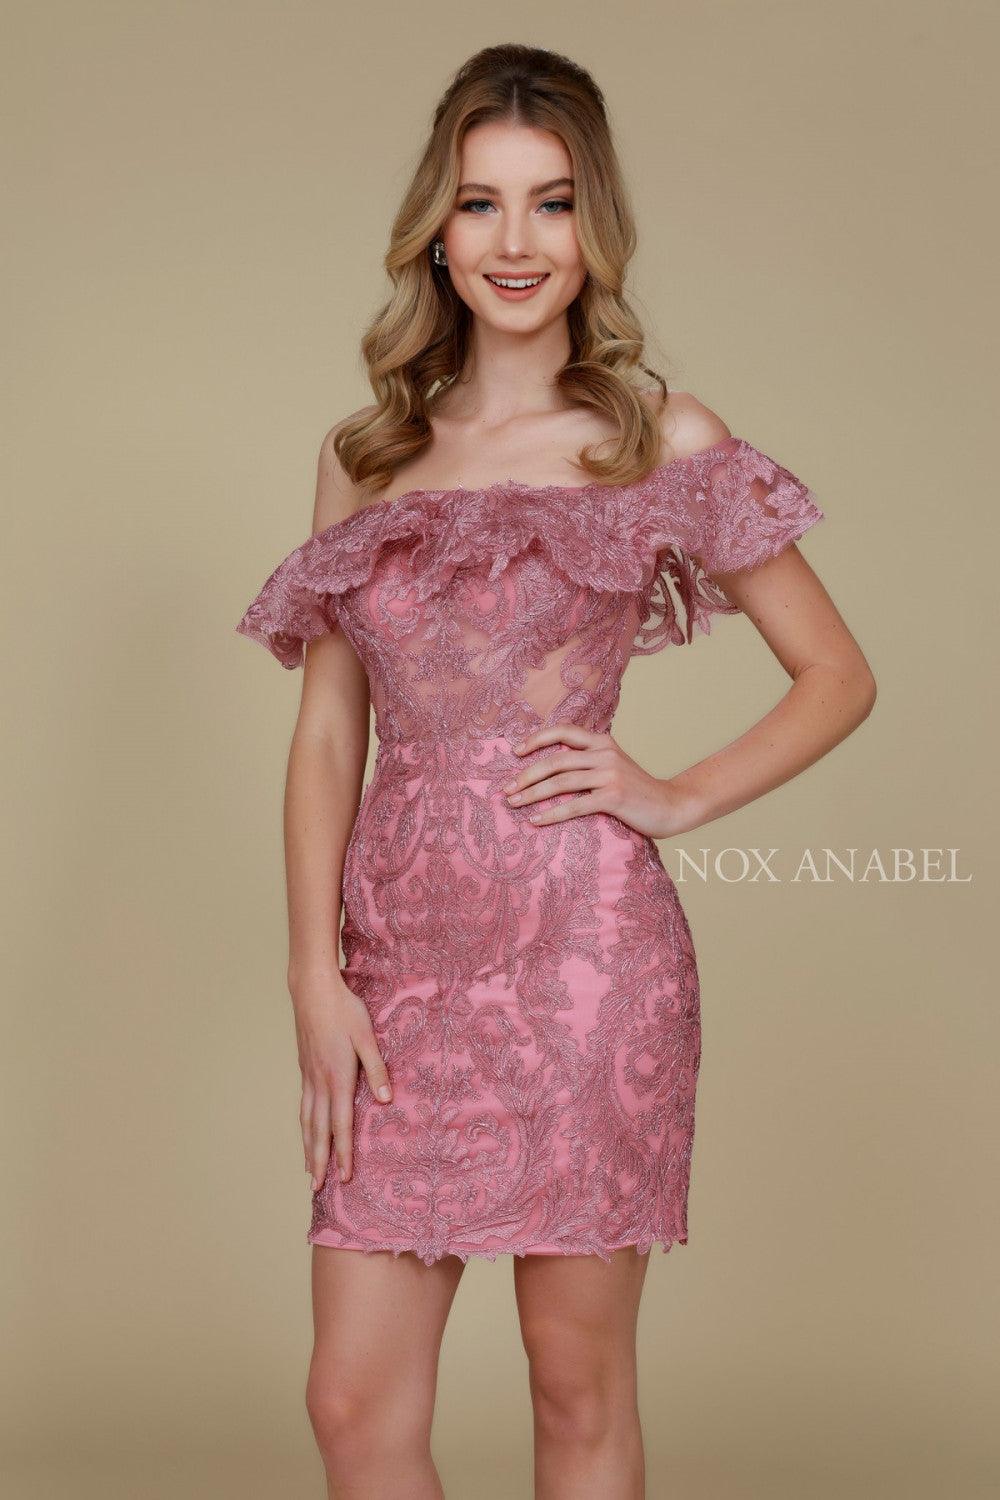 Short Ruffled Off The Shoulder Formal Cocktail Dress - The Dress Outlet Nox Anabel